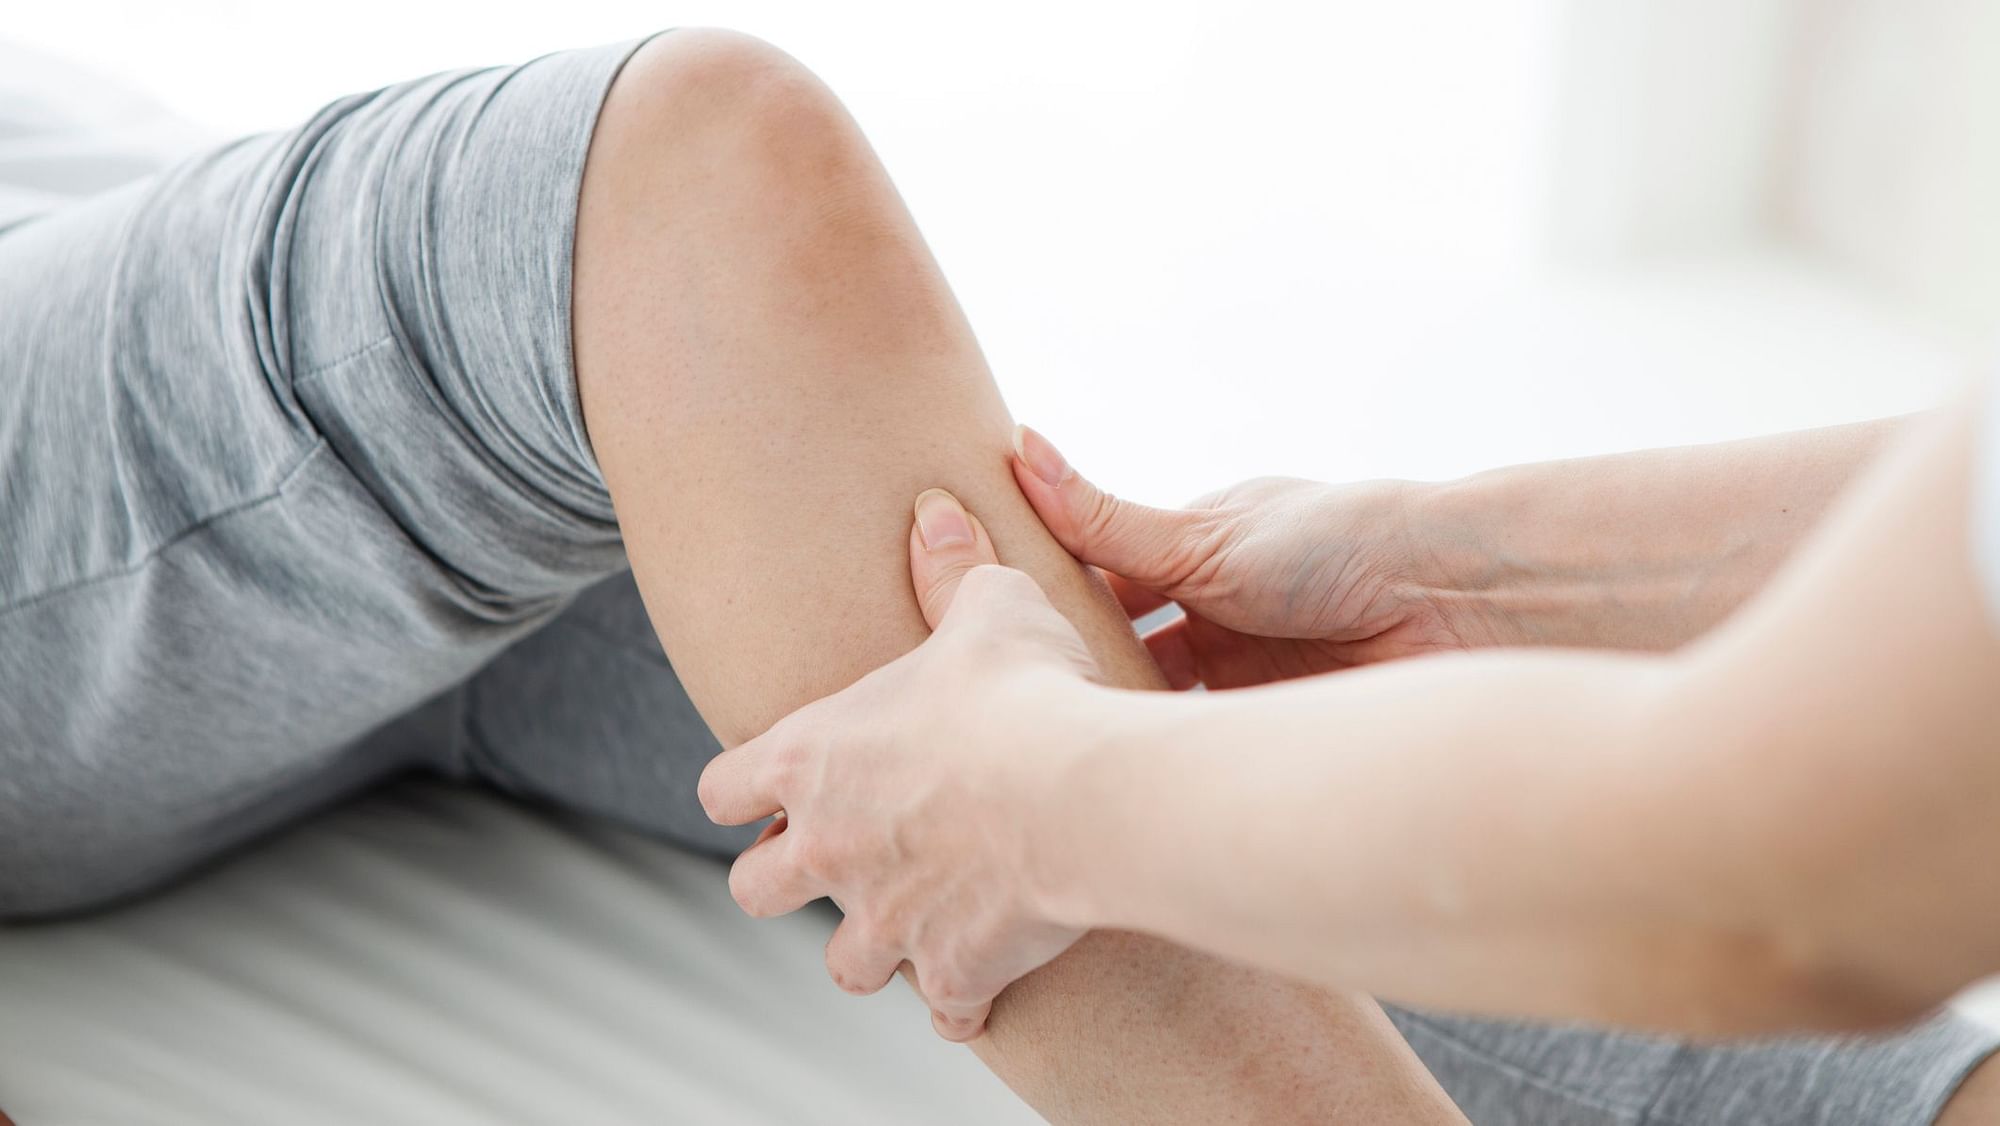 Massages can help ease arthritis pain, a study has found.&nbsp;